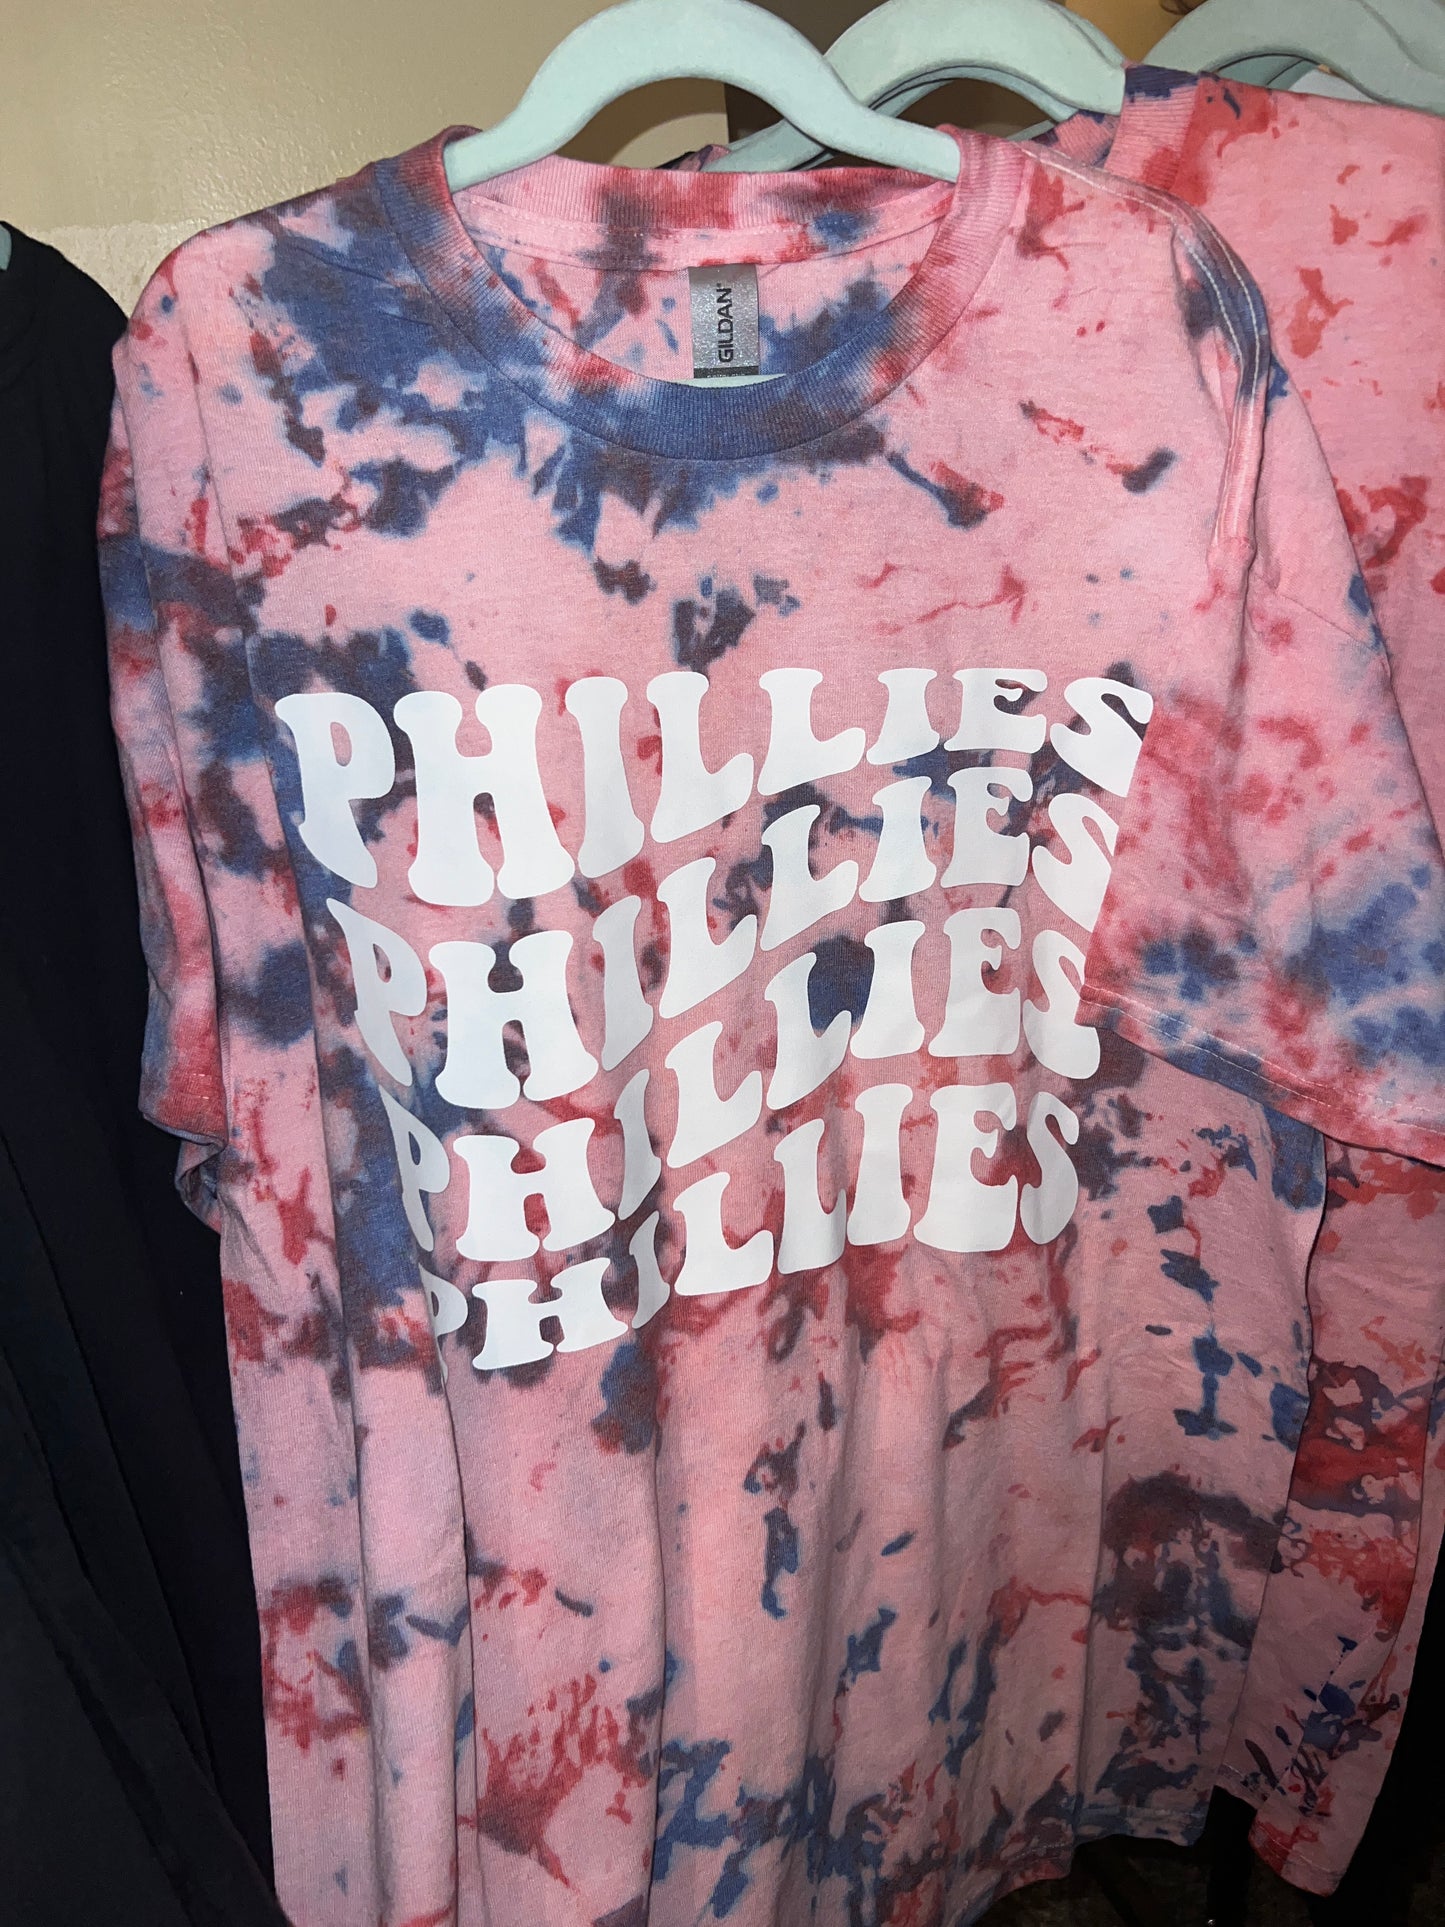 Phillies - T-shirt (Medium)